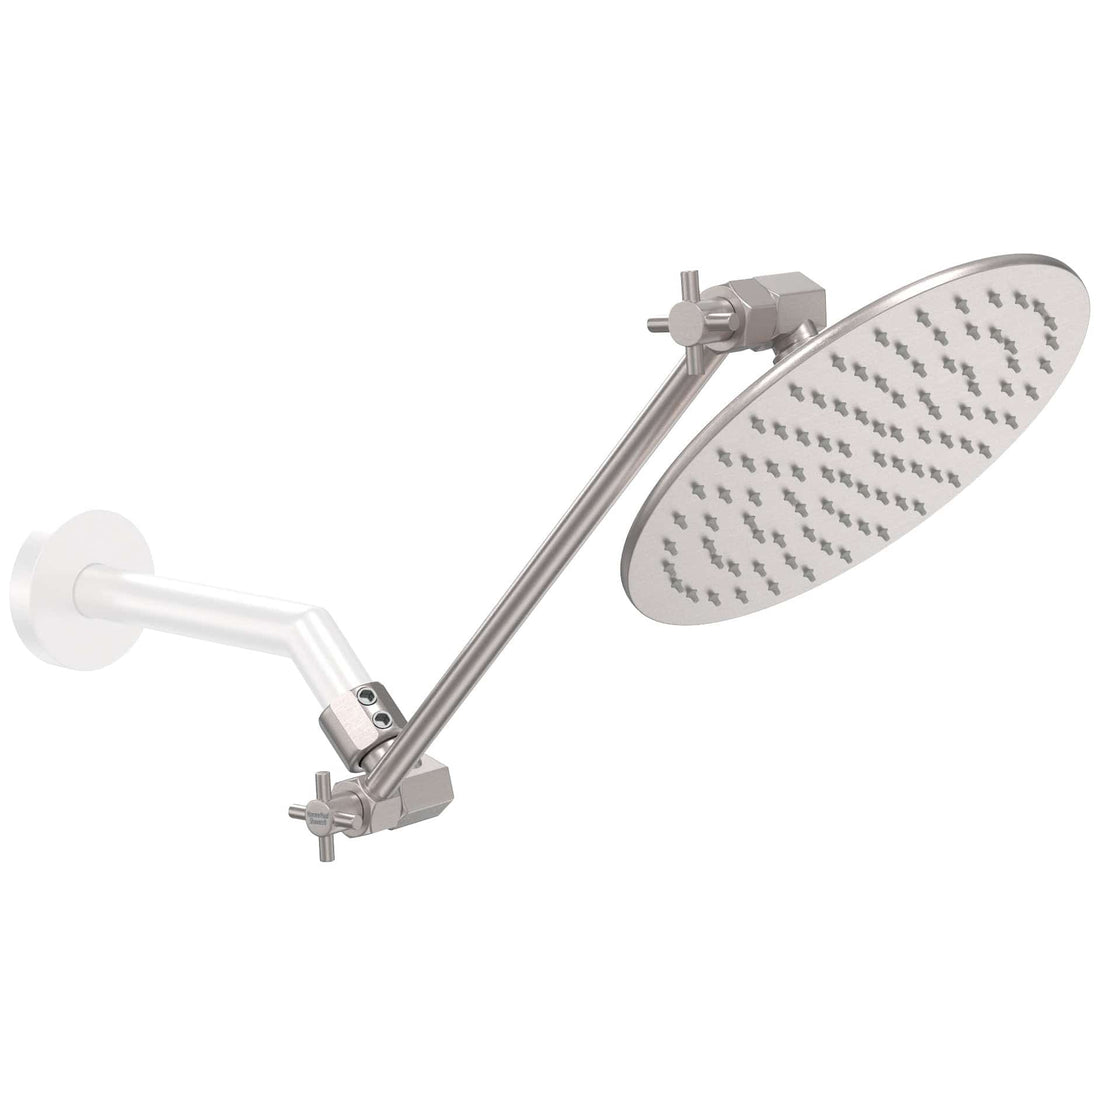 (Main Image) Brushed Nickel / 12 Inch Adjustable Shower Arm with 8 Inch Rain Shower Head - The Shower Head Store